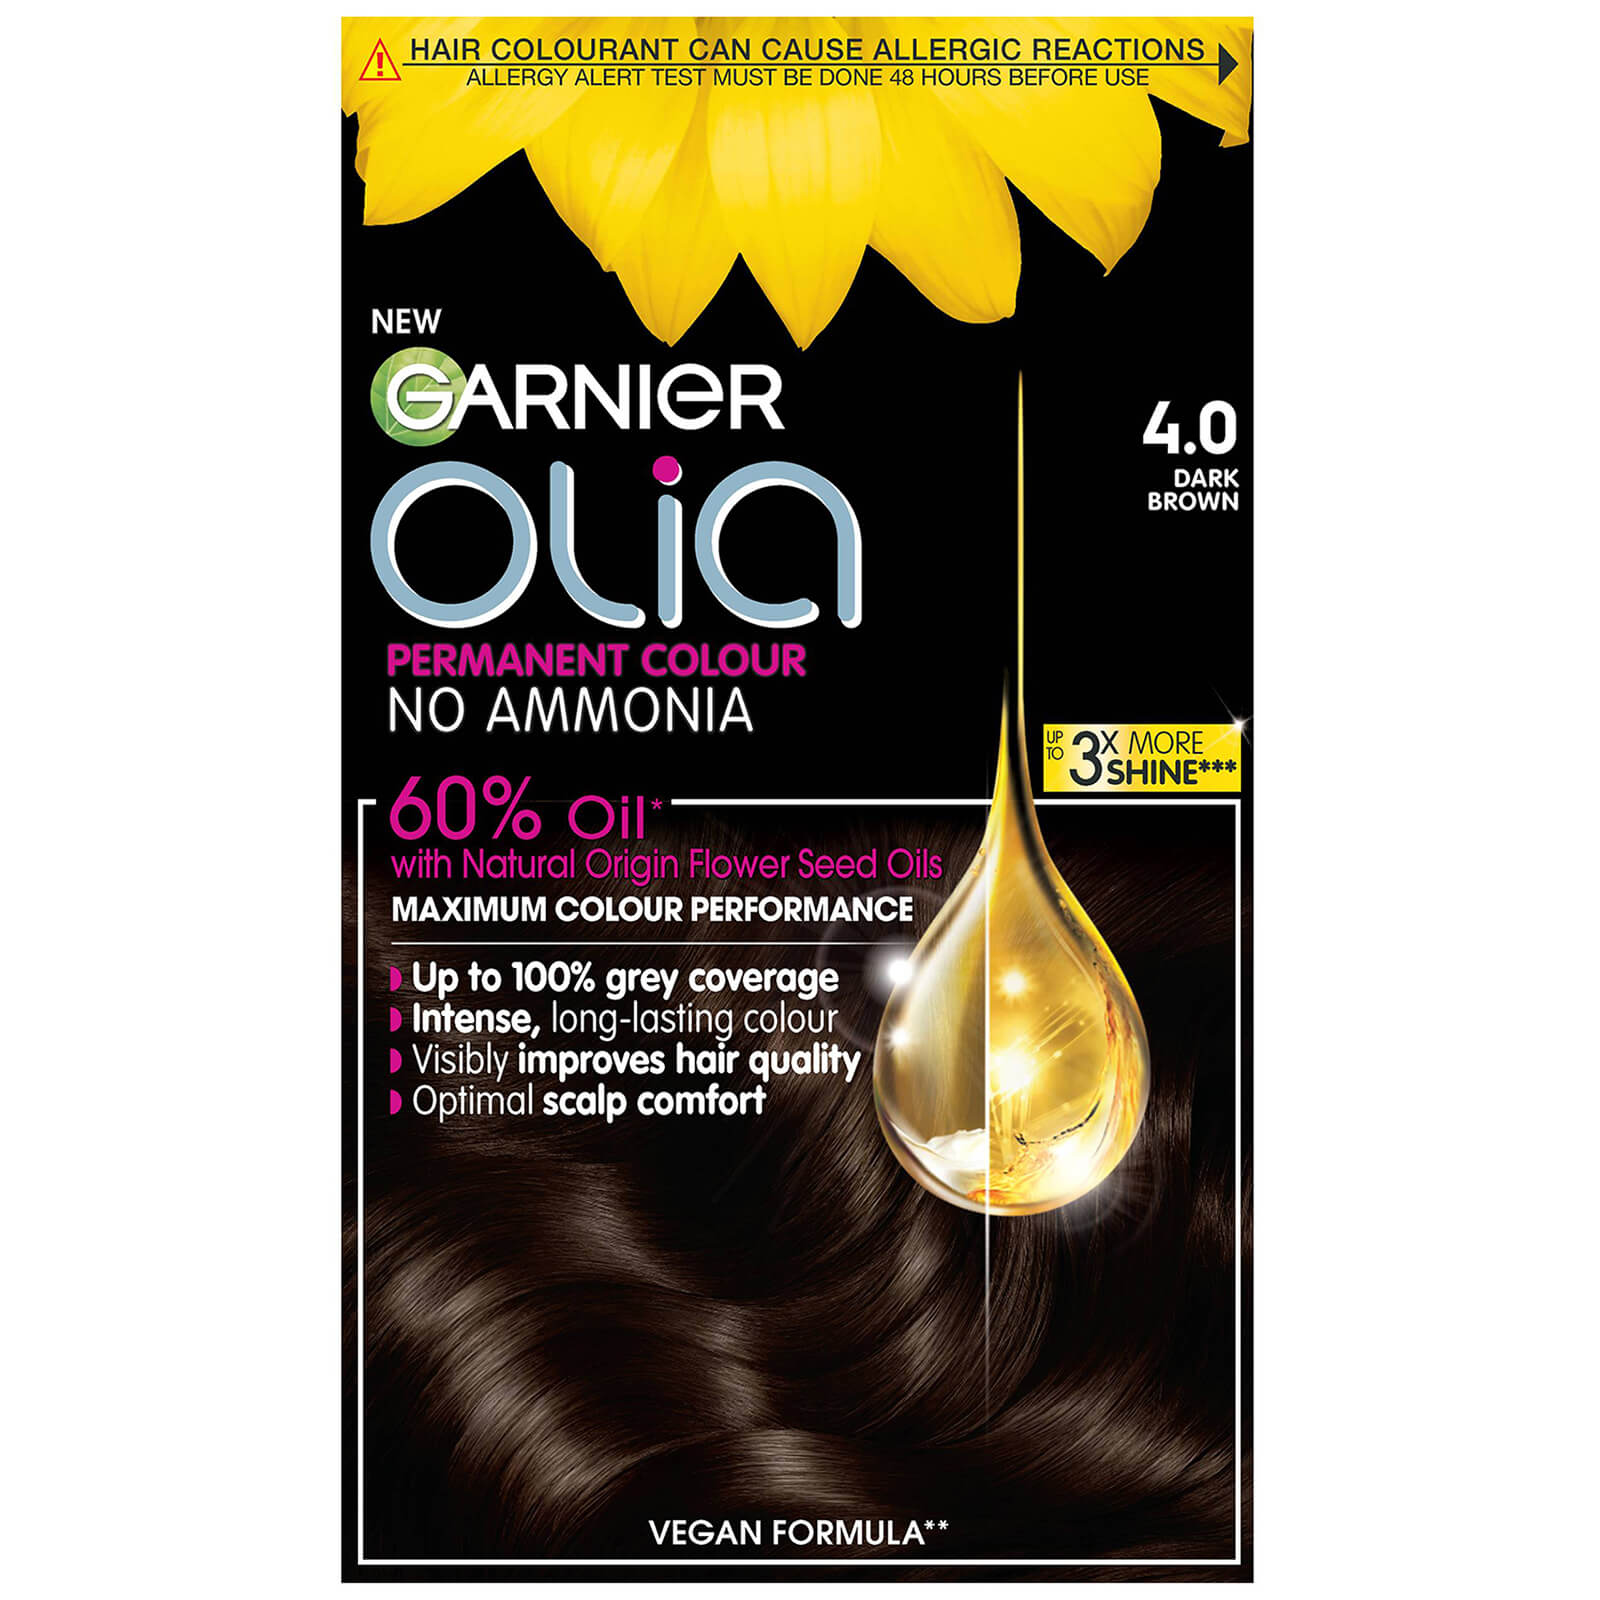 Garnier Olia Permanent Hair Dye (Various Shades) - 4.0 Dark Brown